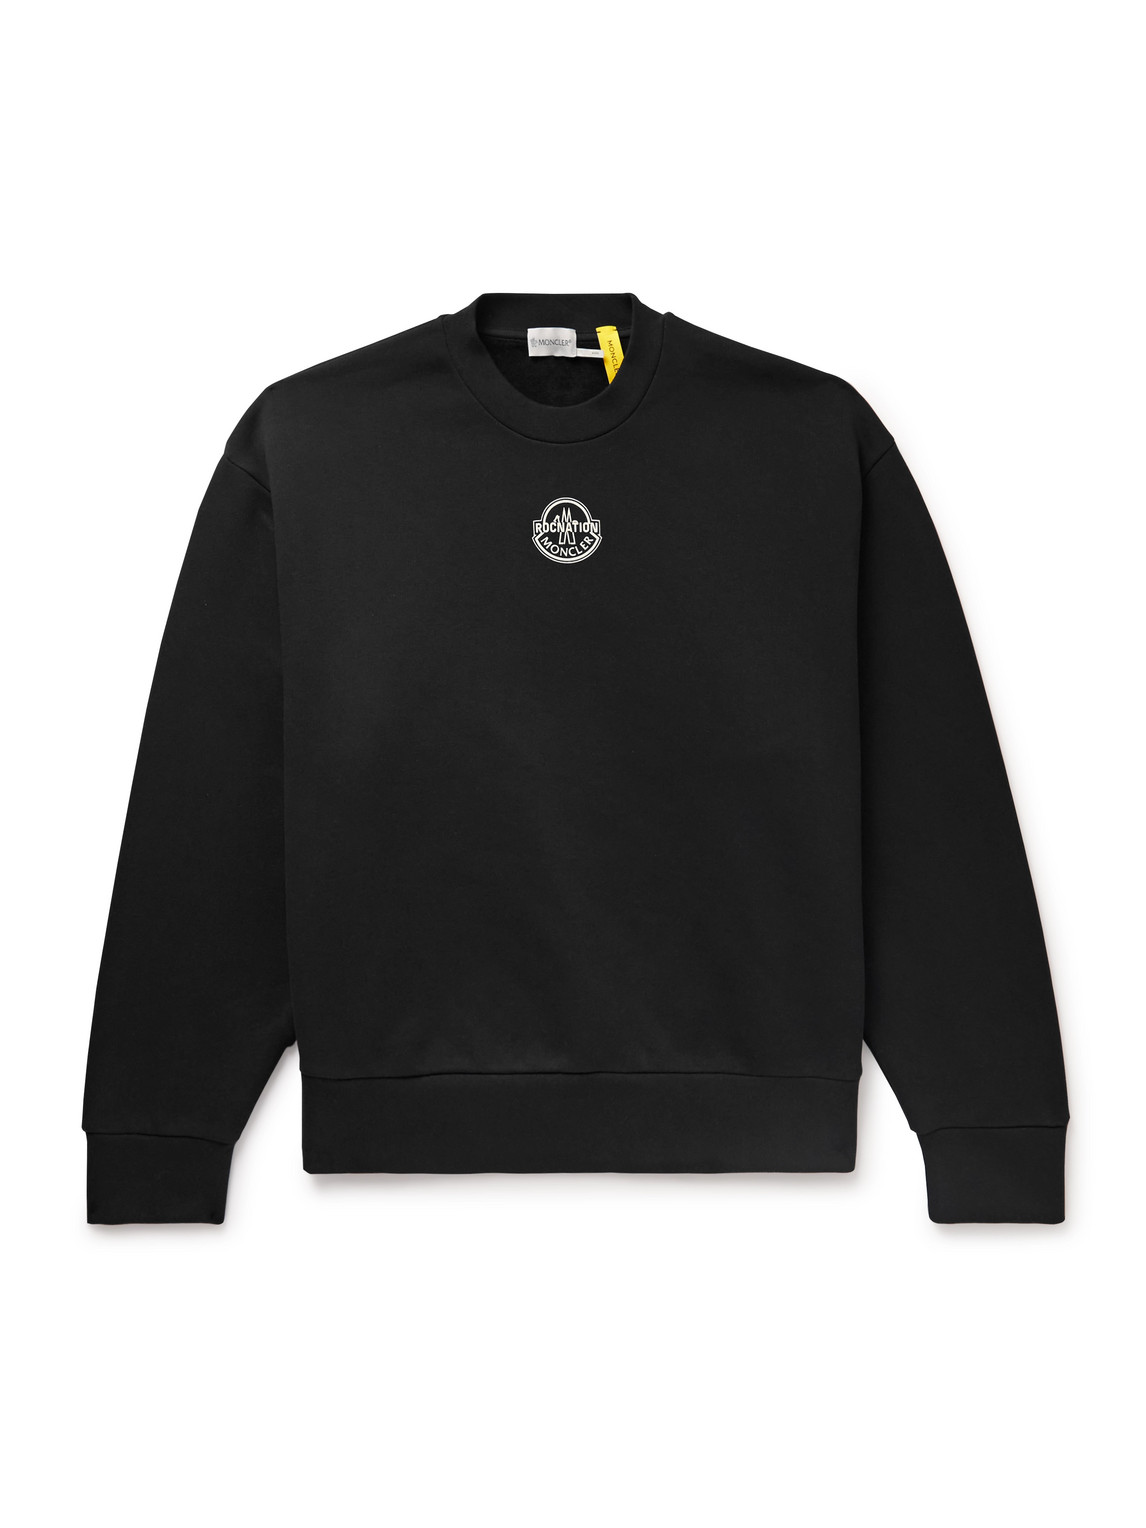 Roc Nation by Jay-Z Logo-Print Cotton-Jersey Sweatshirt